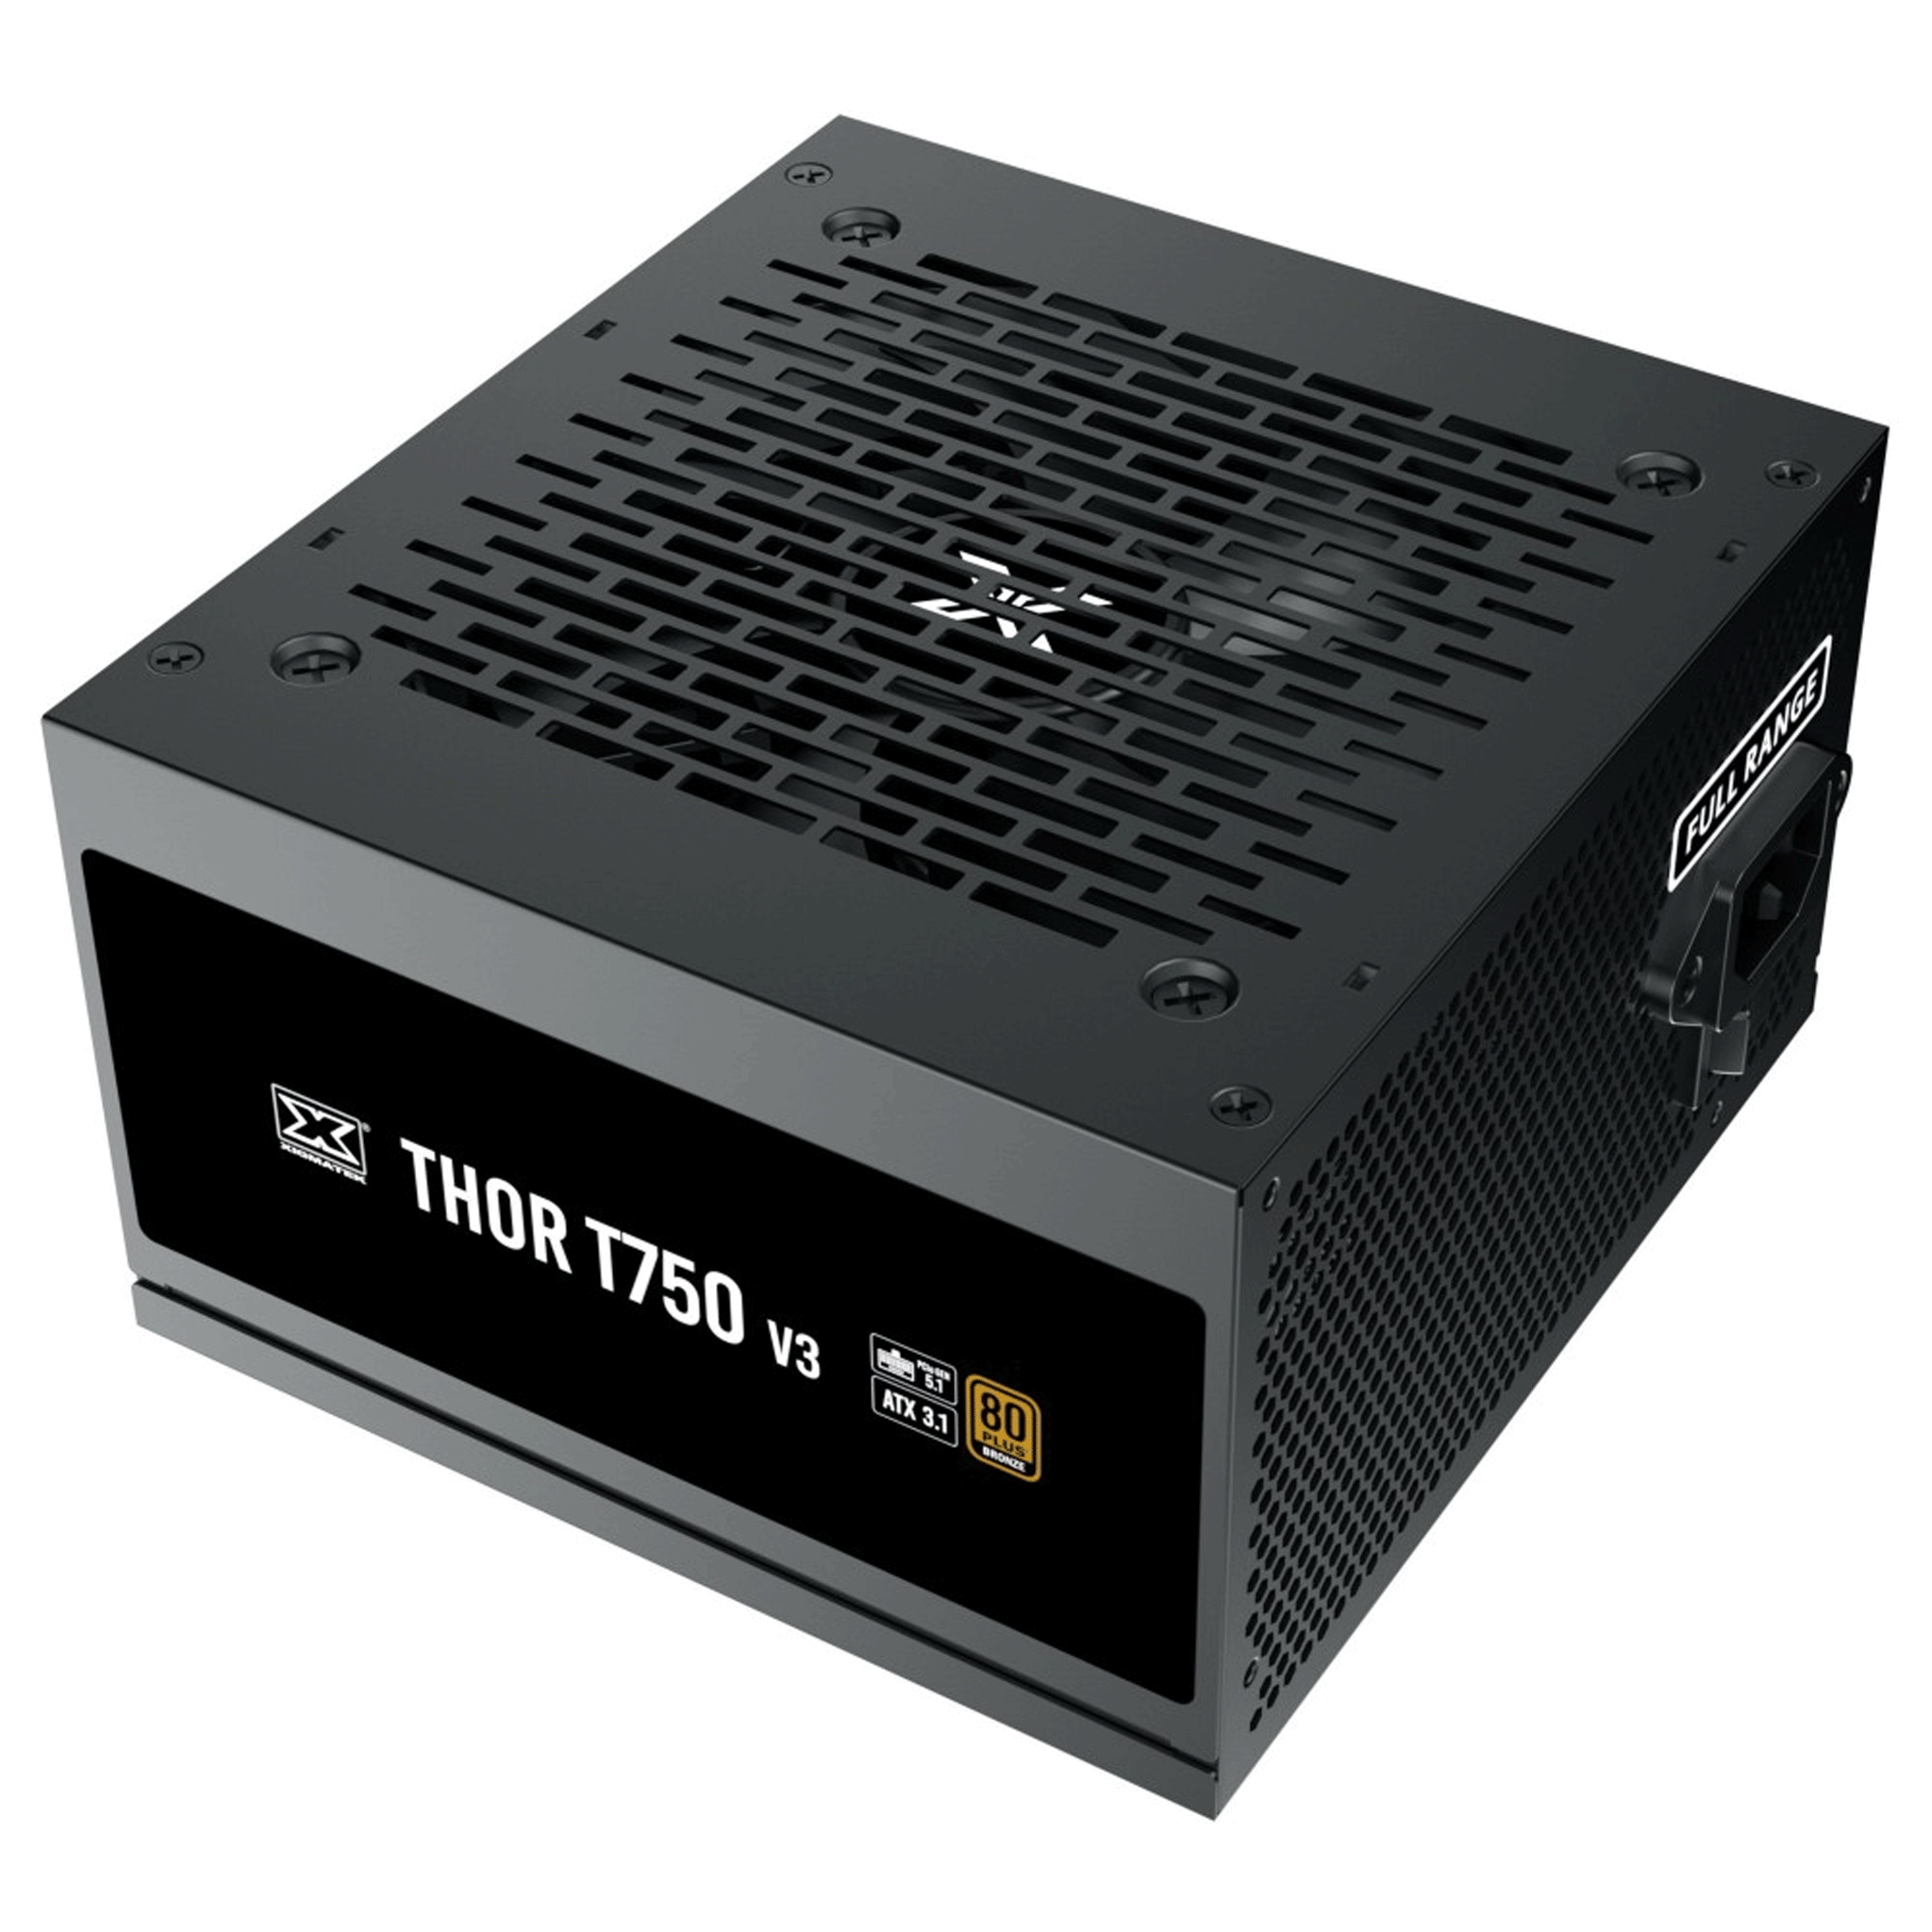 Nguồn Xigmatek Thor T750 V3 750W | 80 Plus Bronze, PCIe Gen 5.1, ATX 3.1, 100% cáp dẹt đen